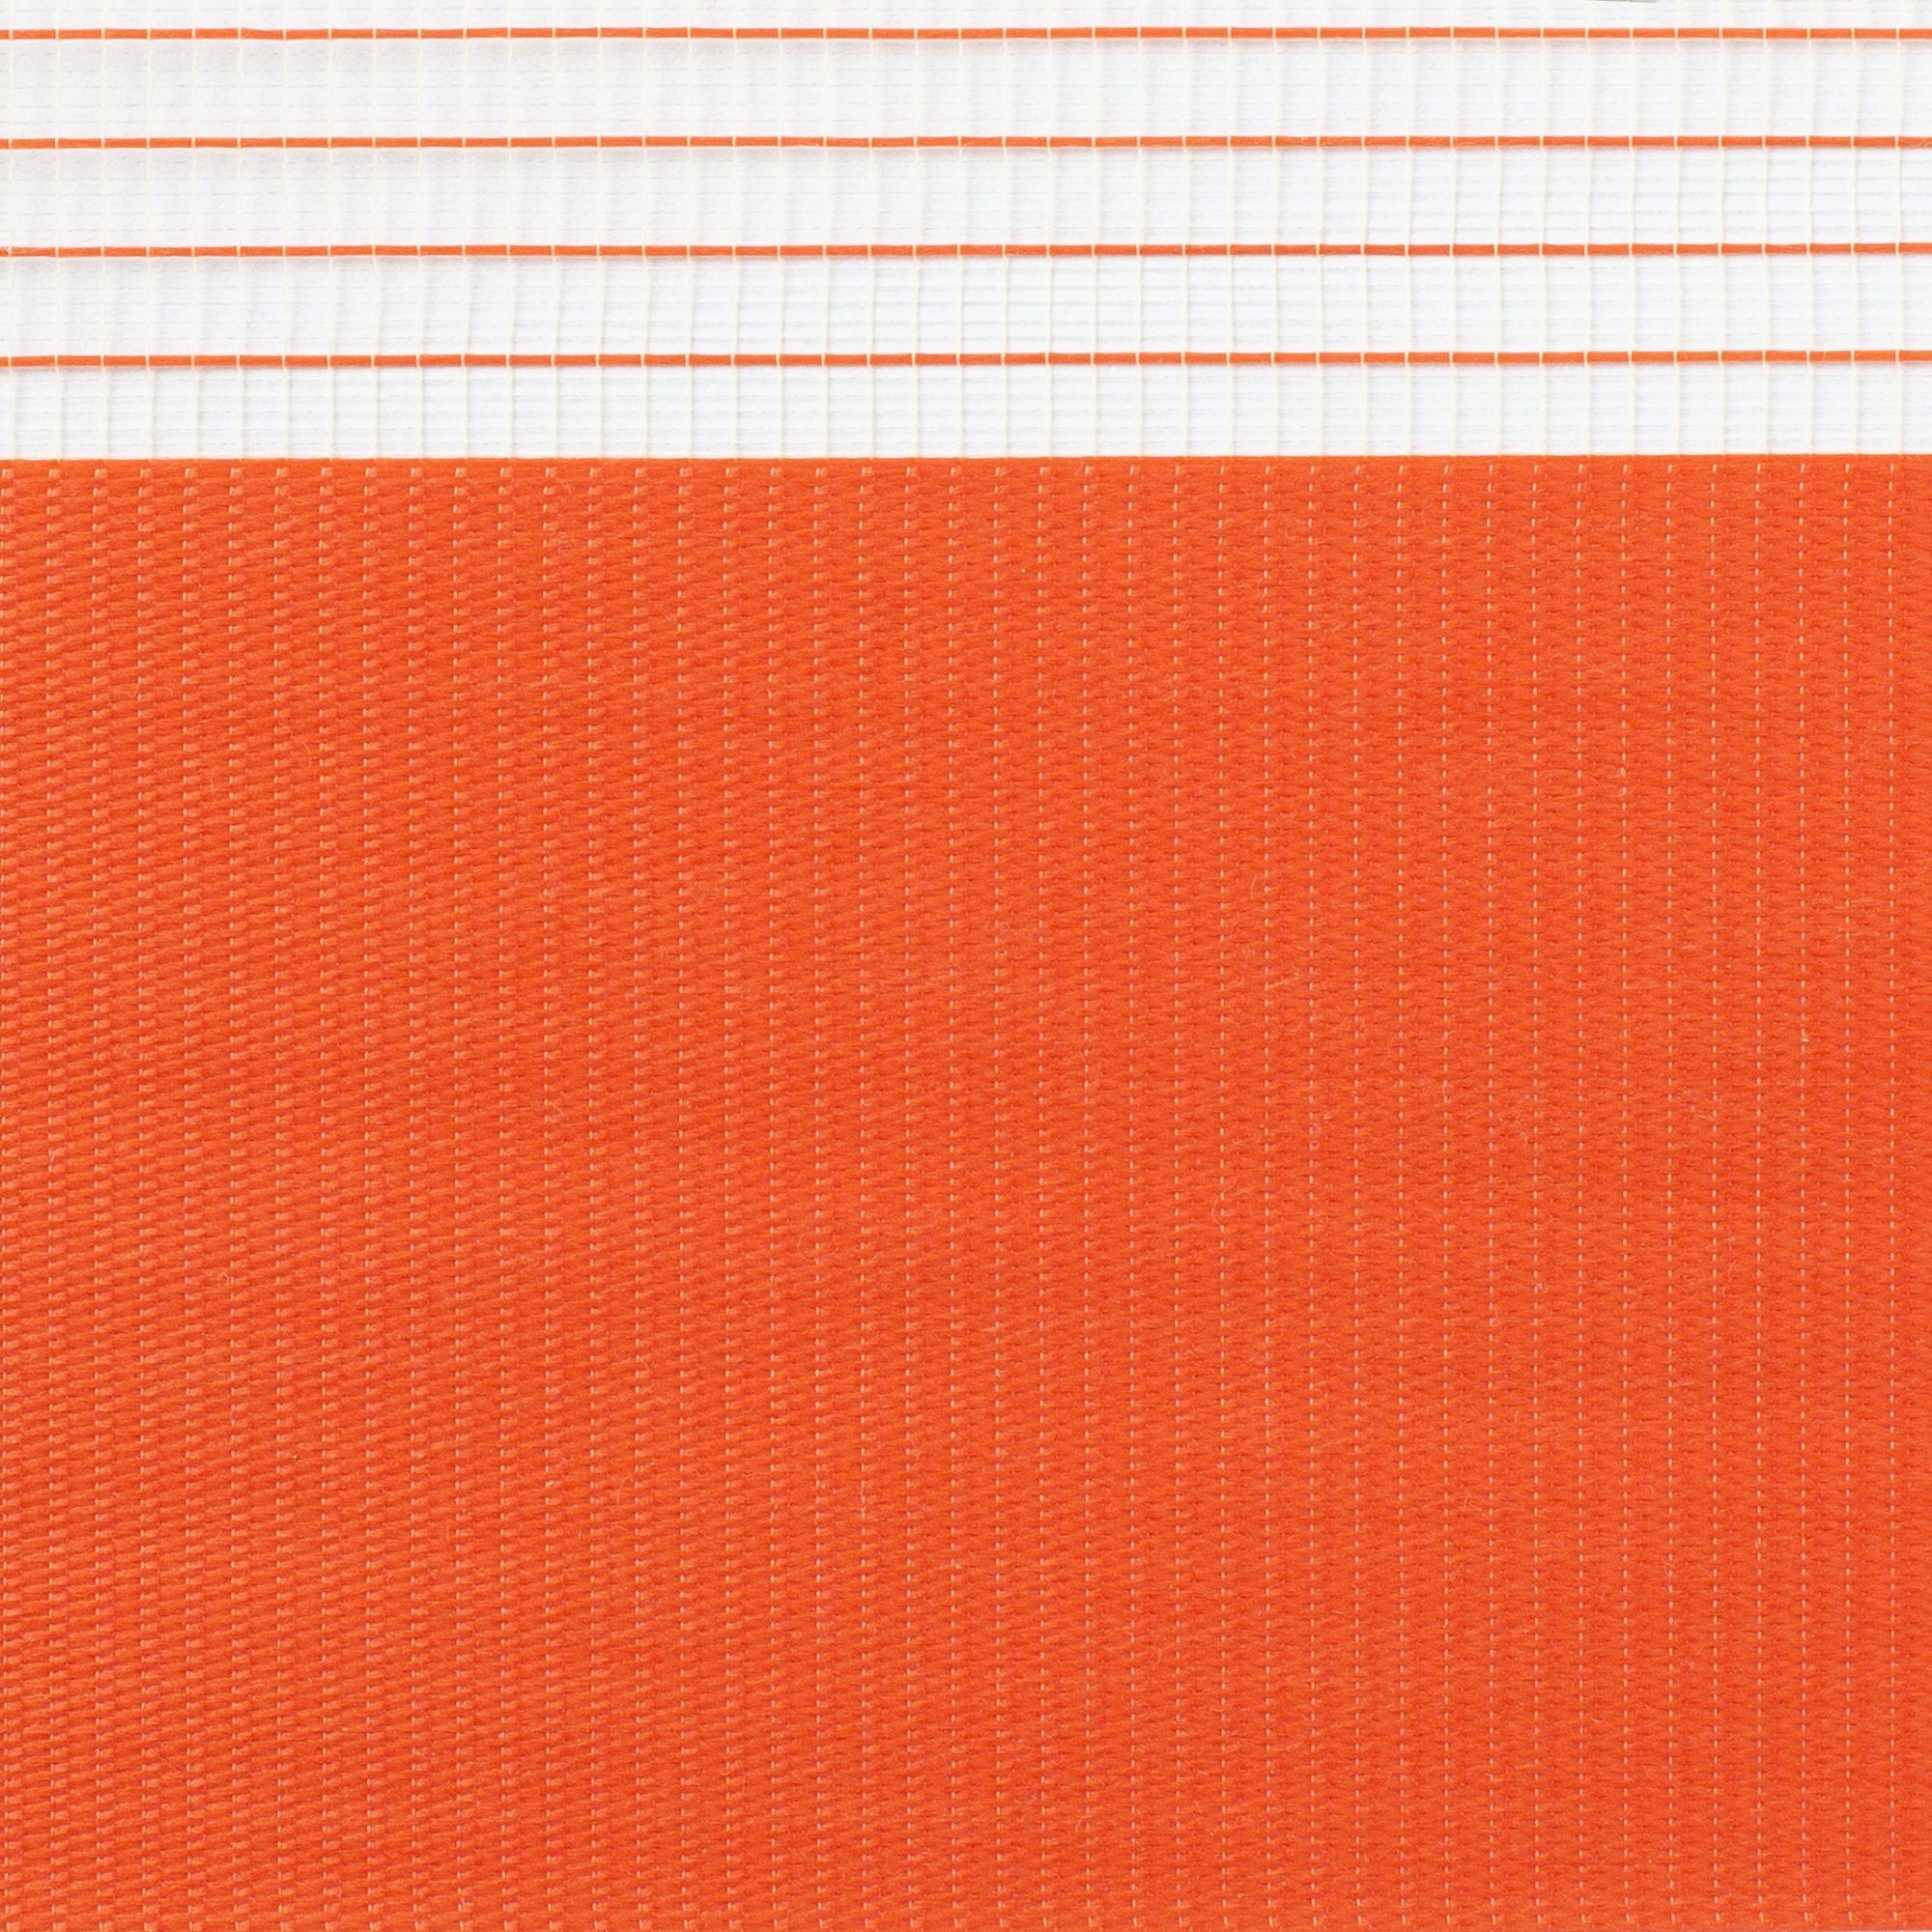 Klemm- Duo-Rollo mit Orange Fix "Colour" Klemmträger, Schraubmontage Doppelrollo Fenster-Roll, Klemm oder Doppelrollo DomDeco,